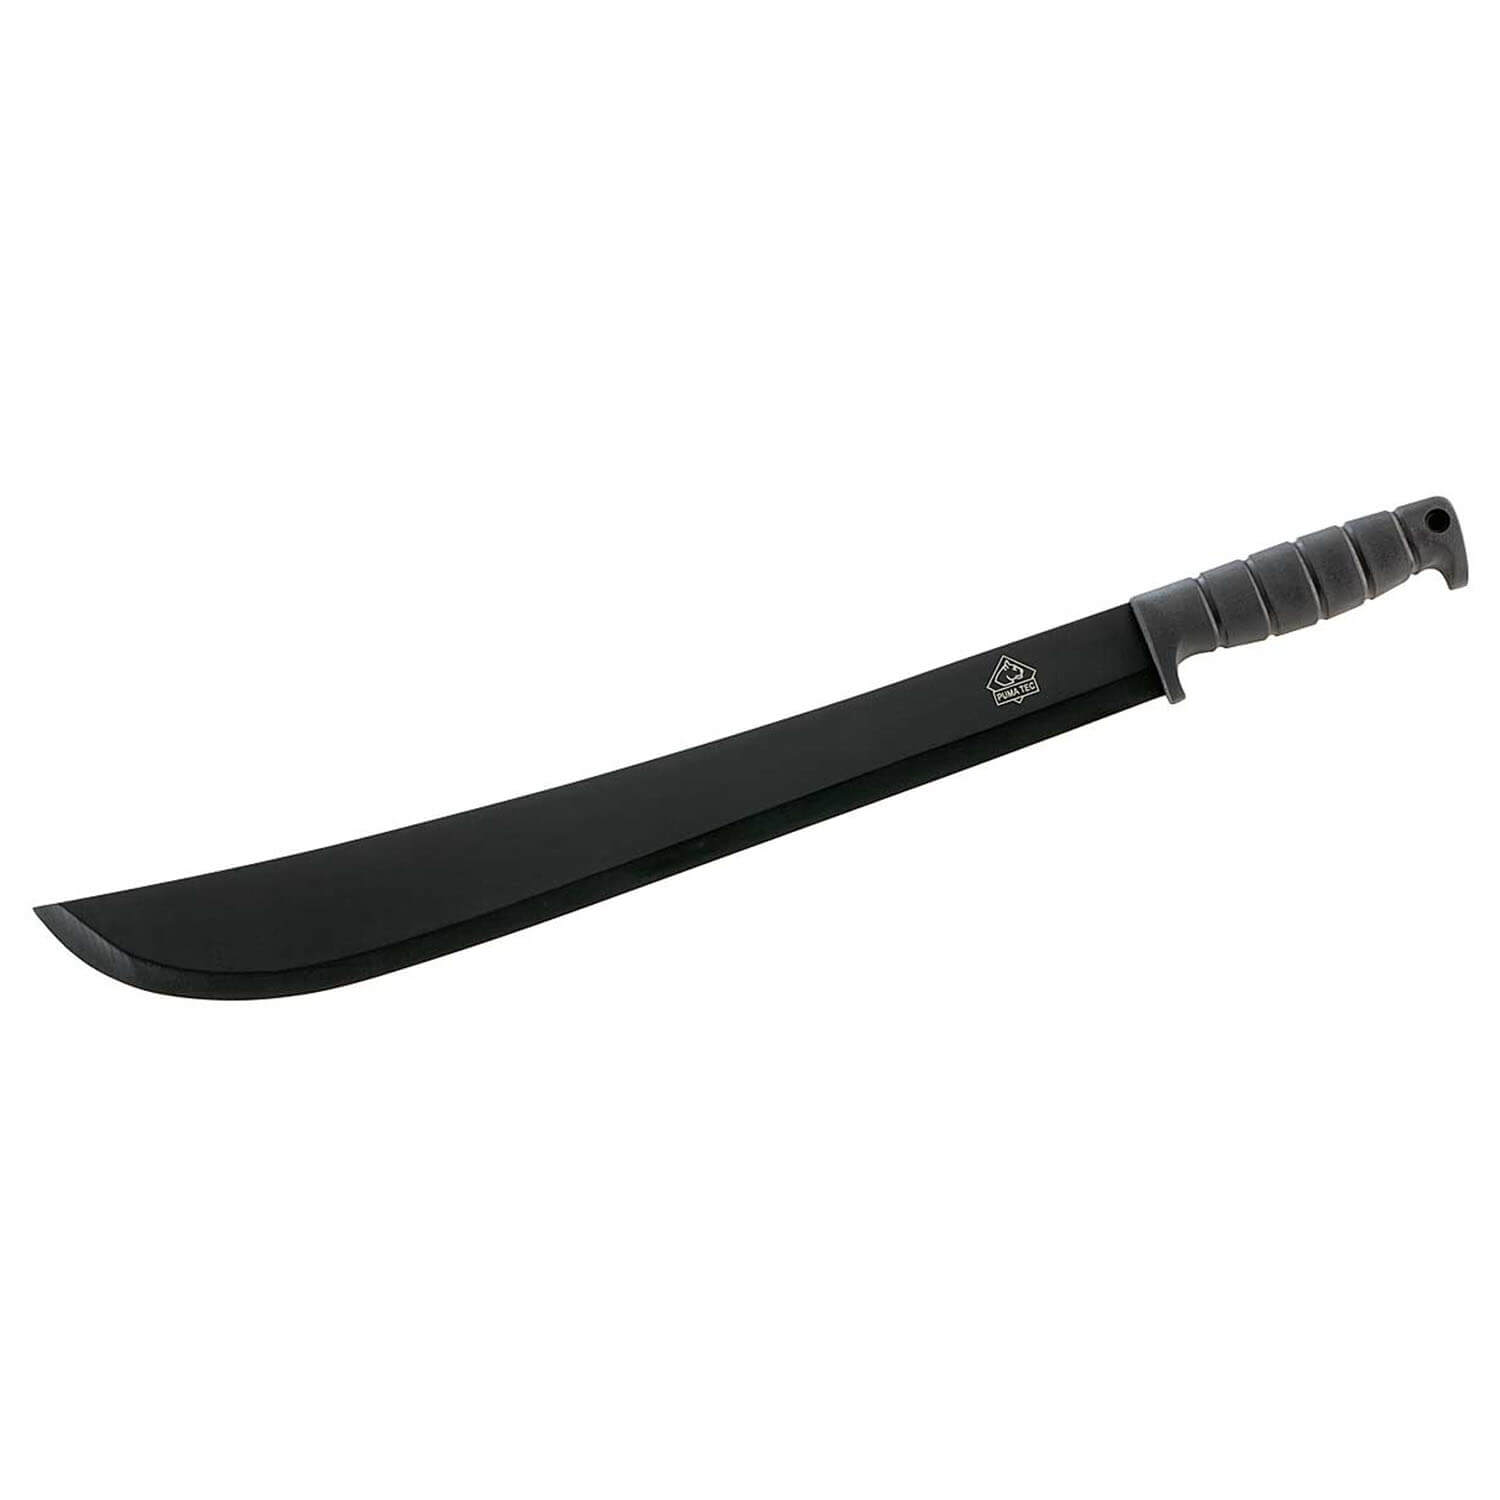 Puma Tec Machete AISI 420 - Hunting Knives